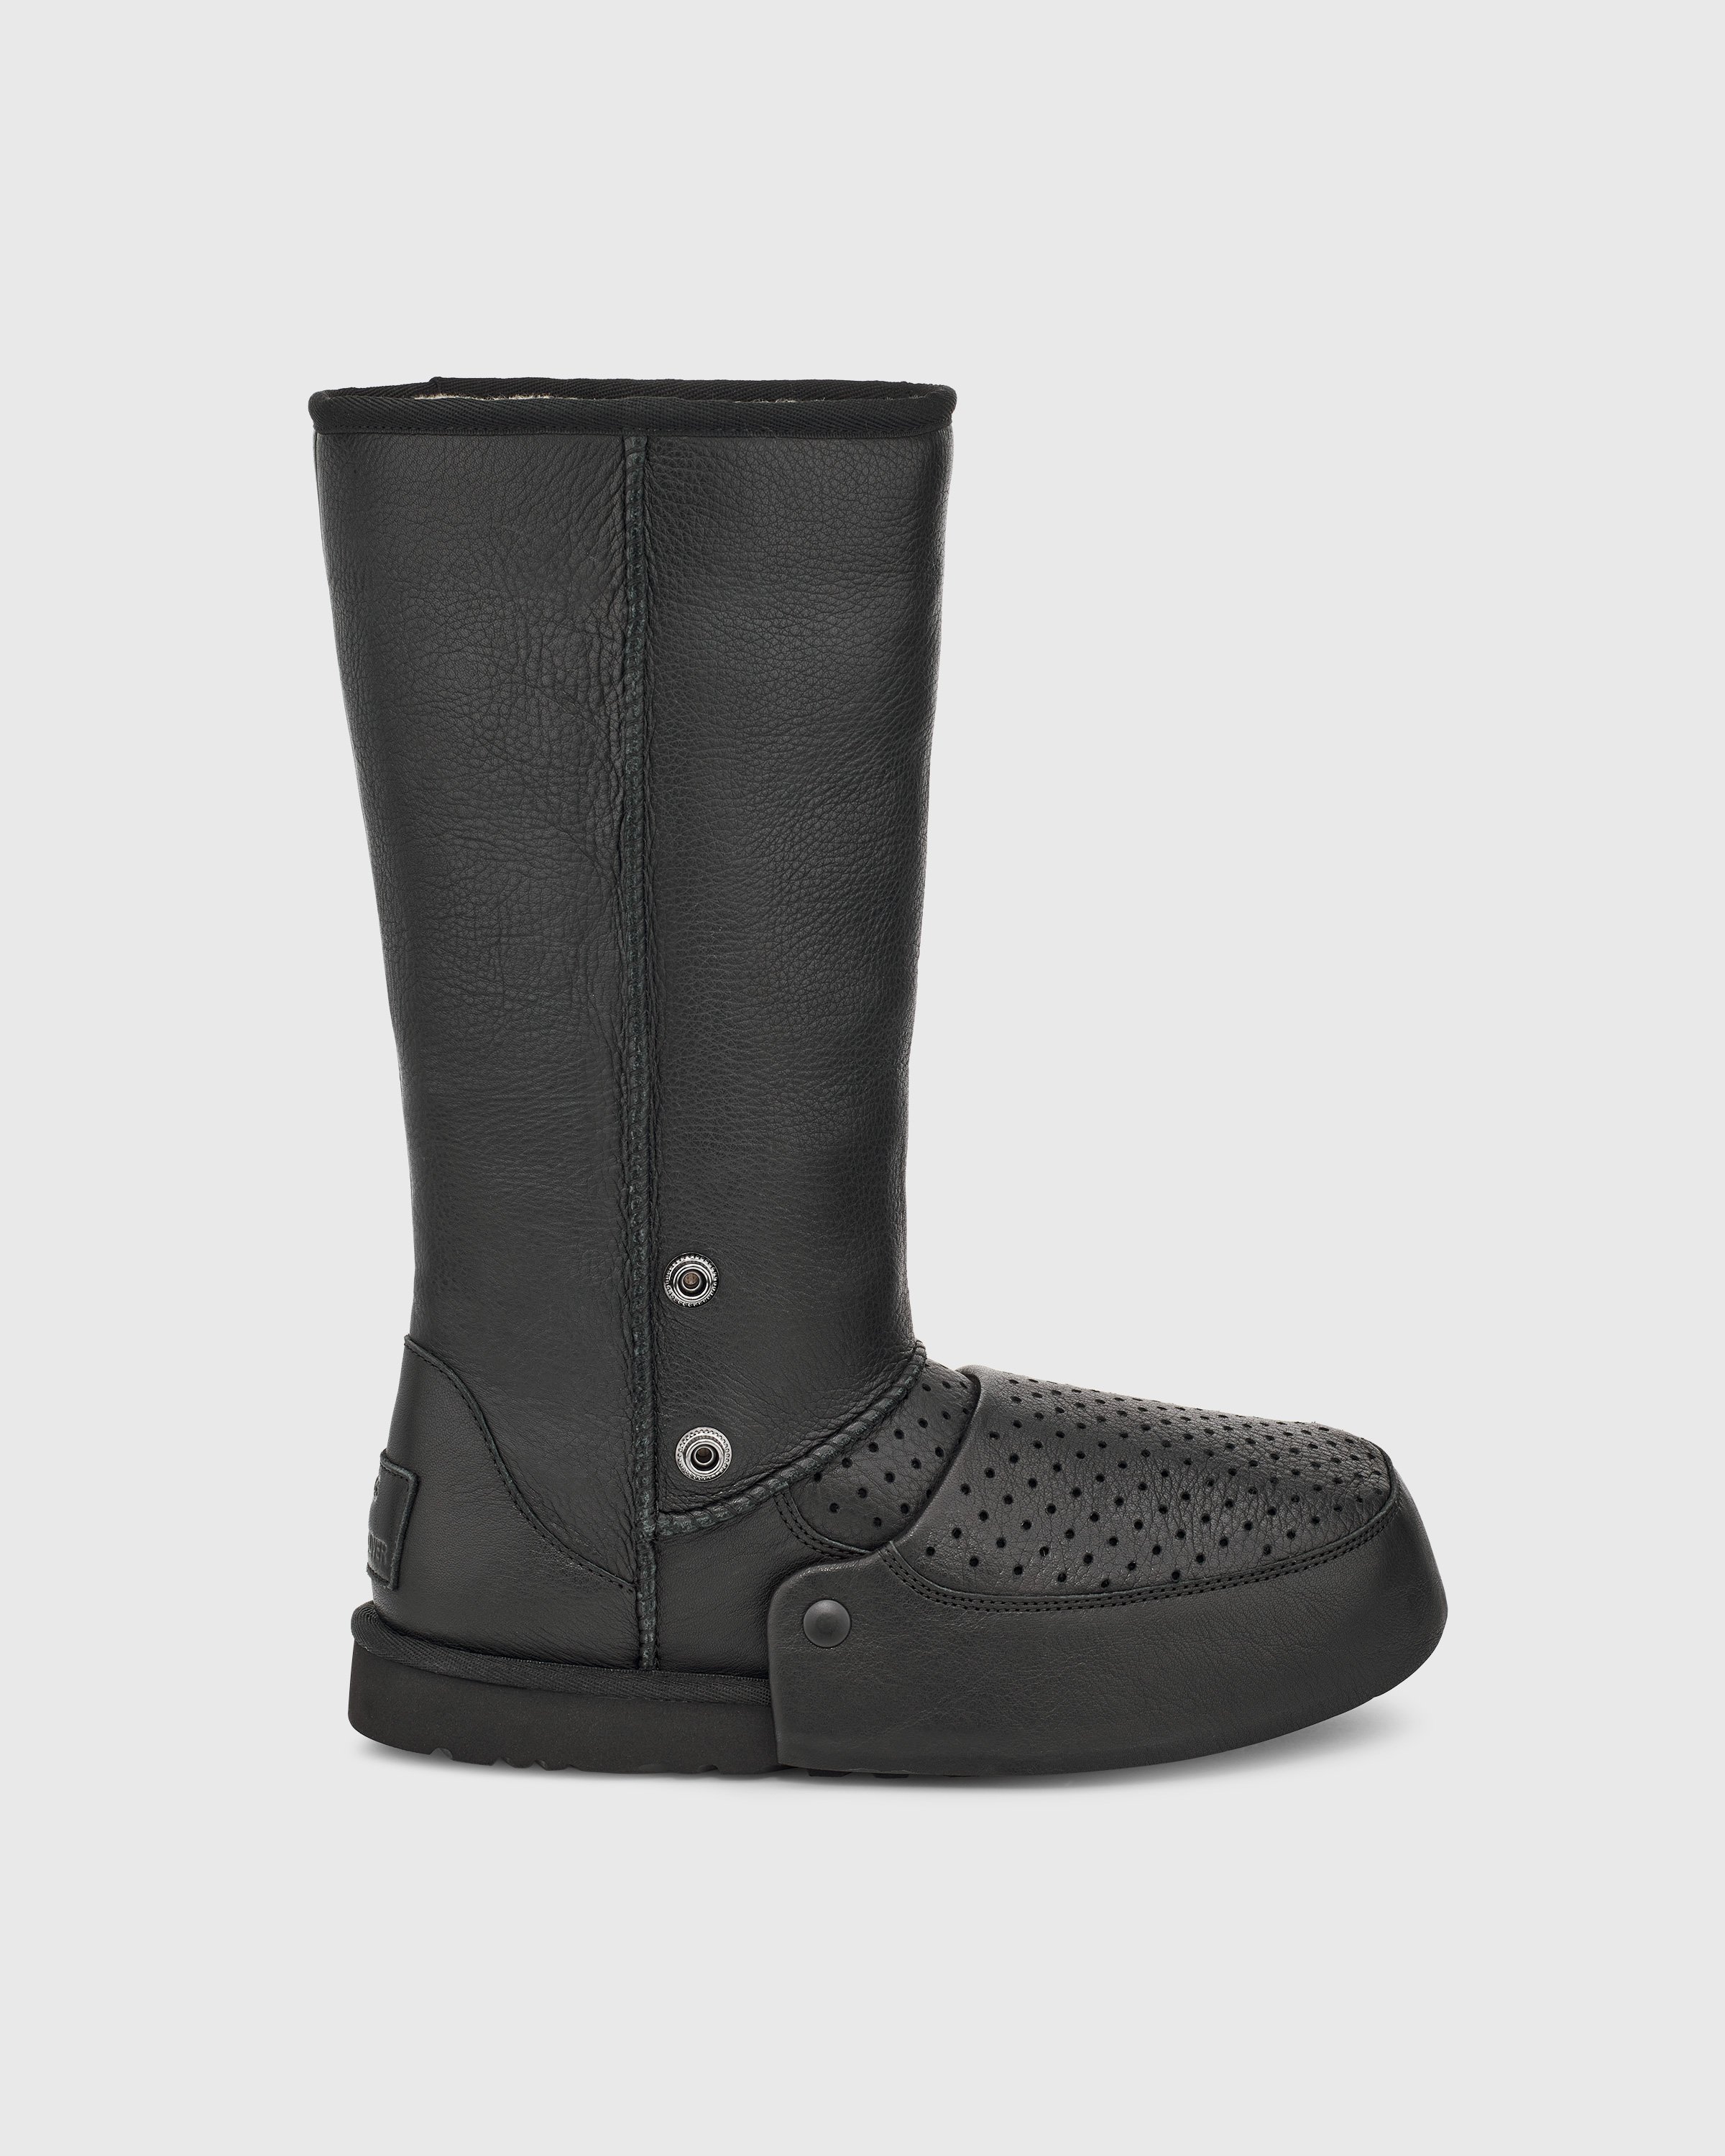 Ugg x Shayne Oliver - Tall Boot Black - Footwear - Black - Image 5